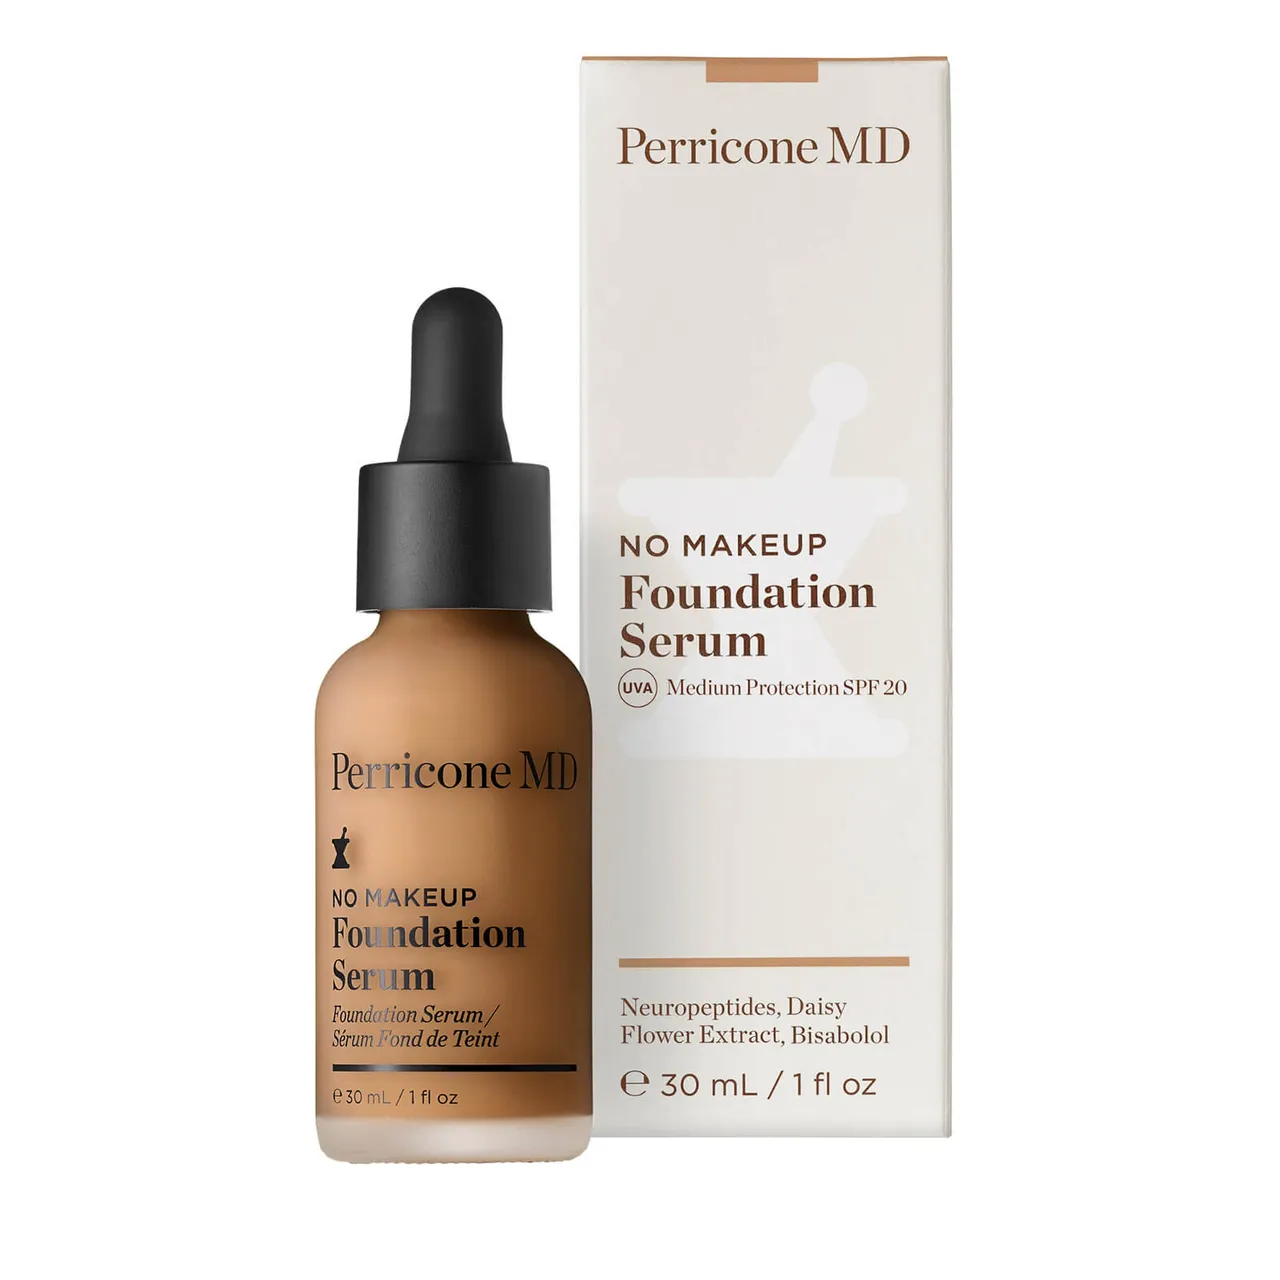 Perricone MD No Makeup Foundation Serum Broad Spectrum SPF20 30ml (Various Shades) - 7 Tan